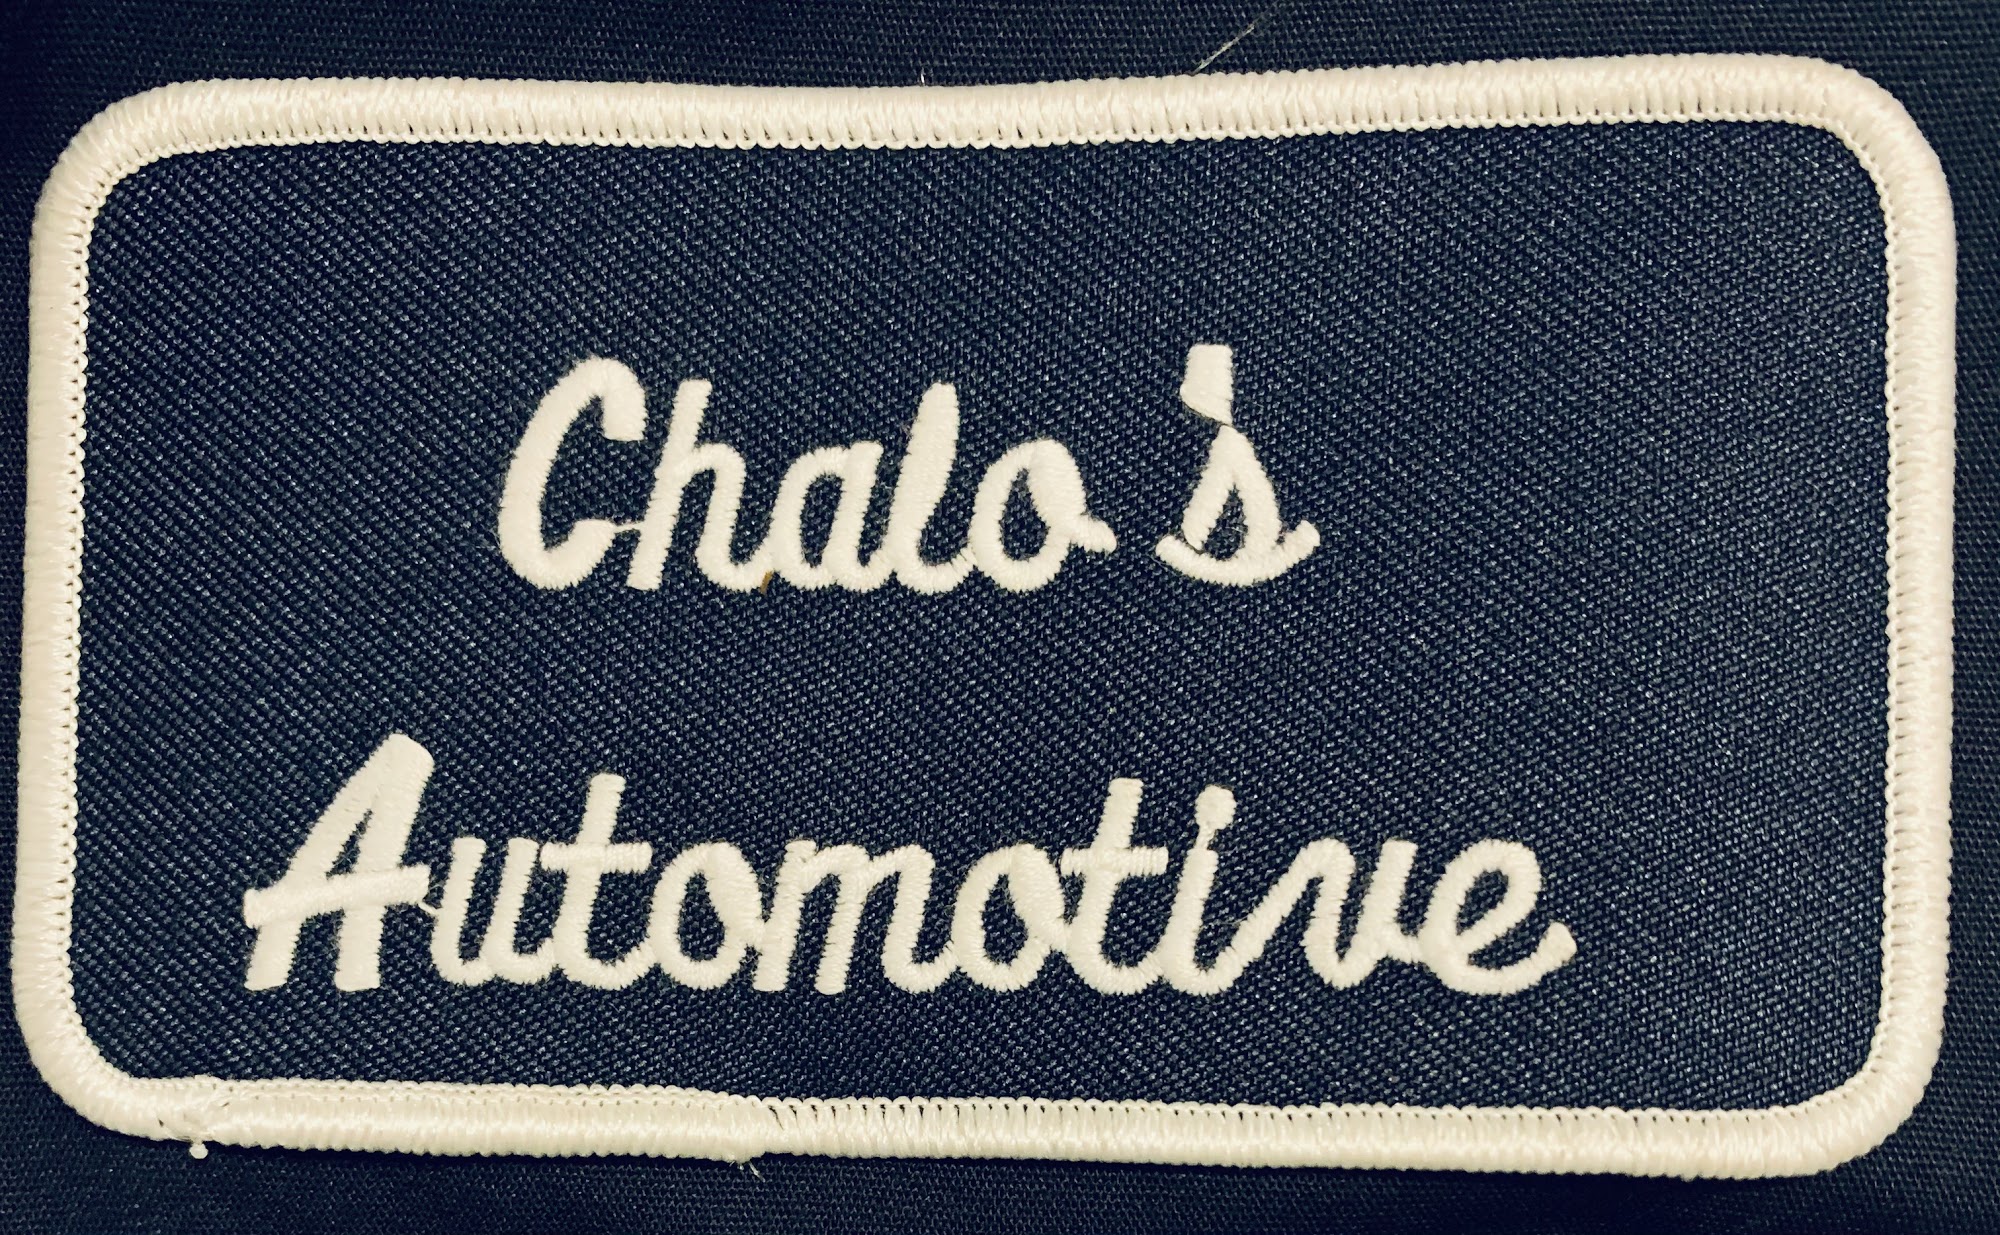 Chalos Automotive Mechanics And Repair (Hablamos español)